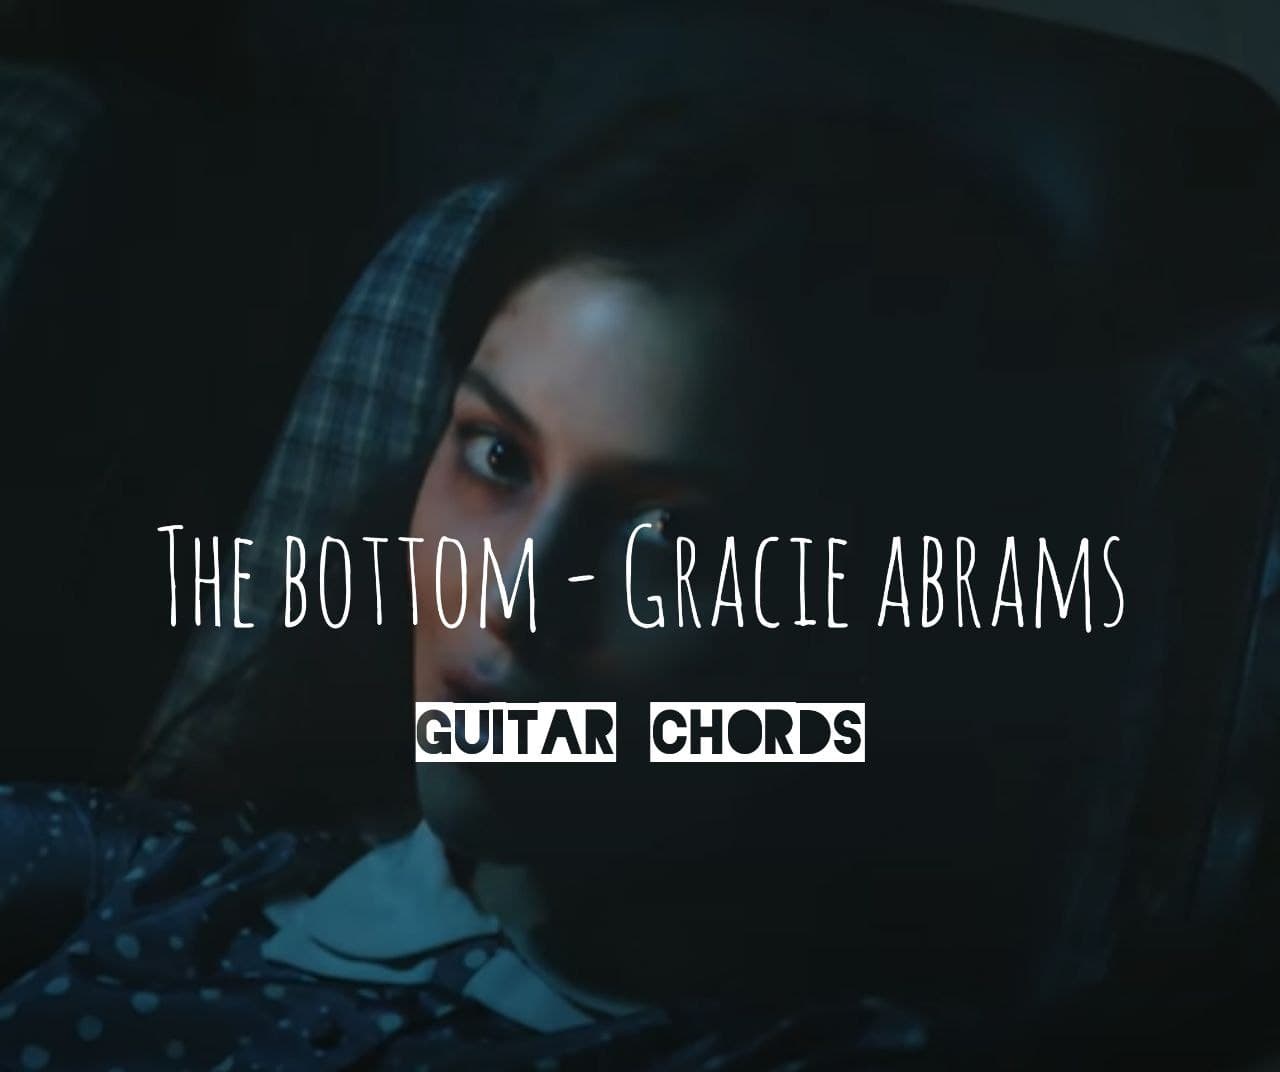 The Bottom guitar chords